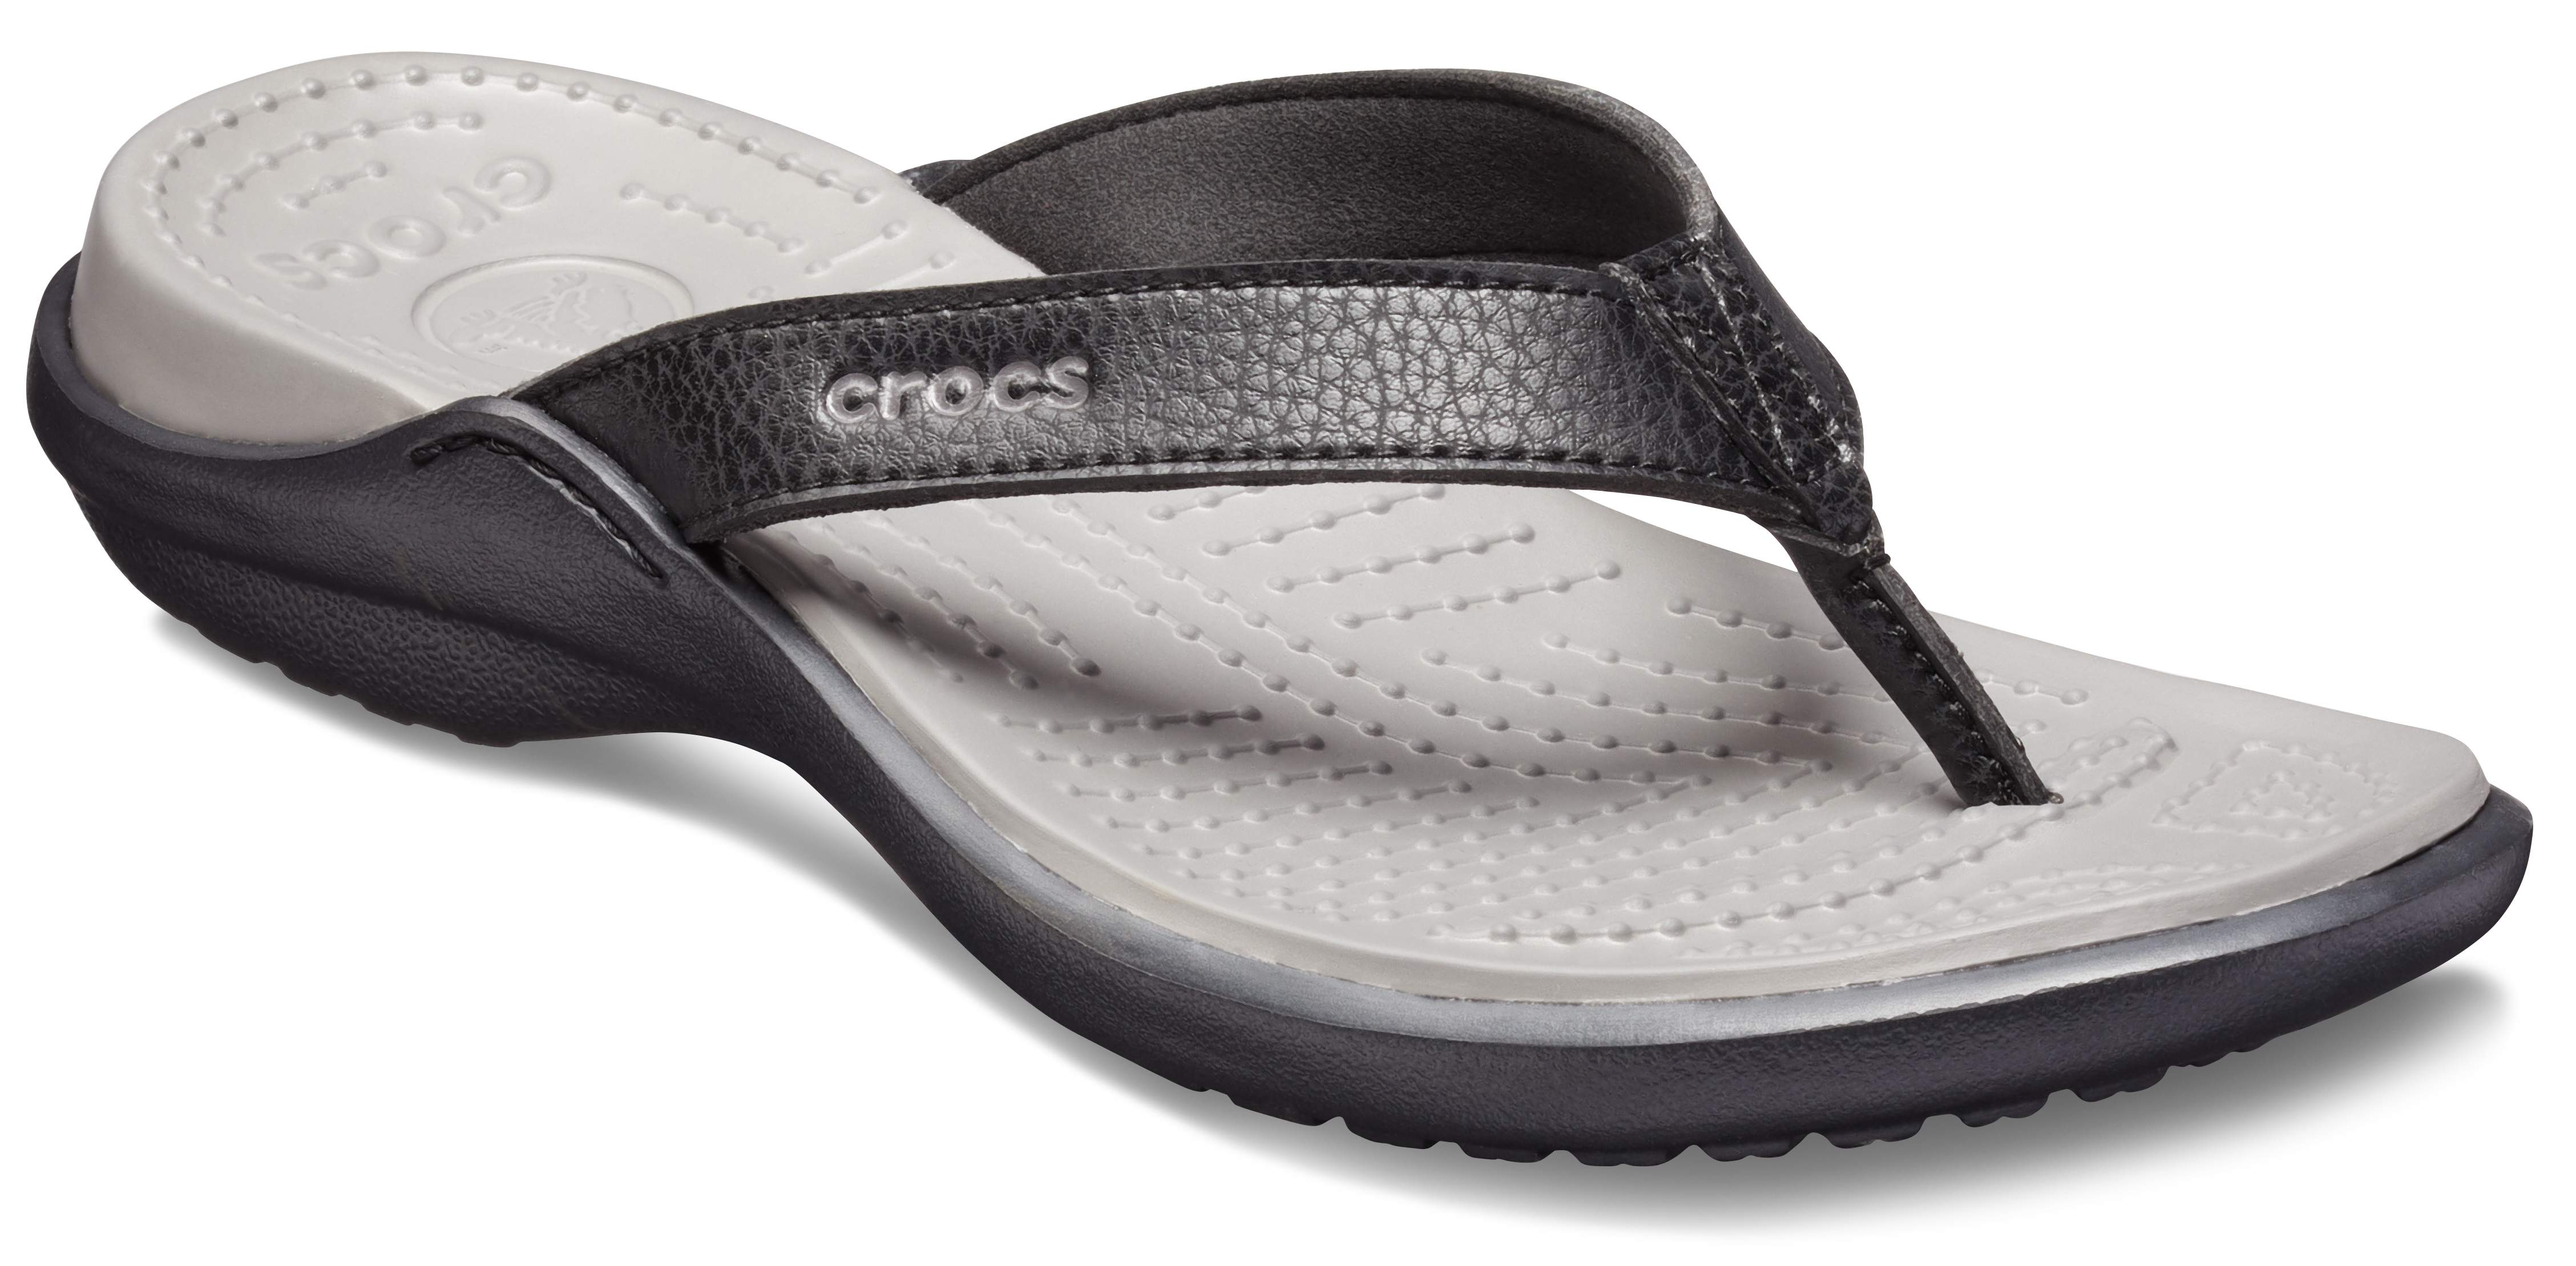 crocs flip flops womens